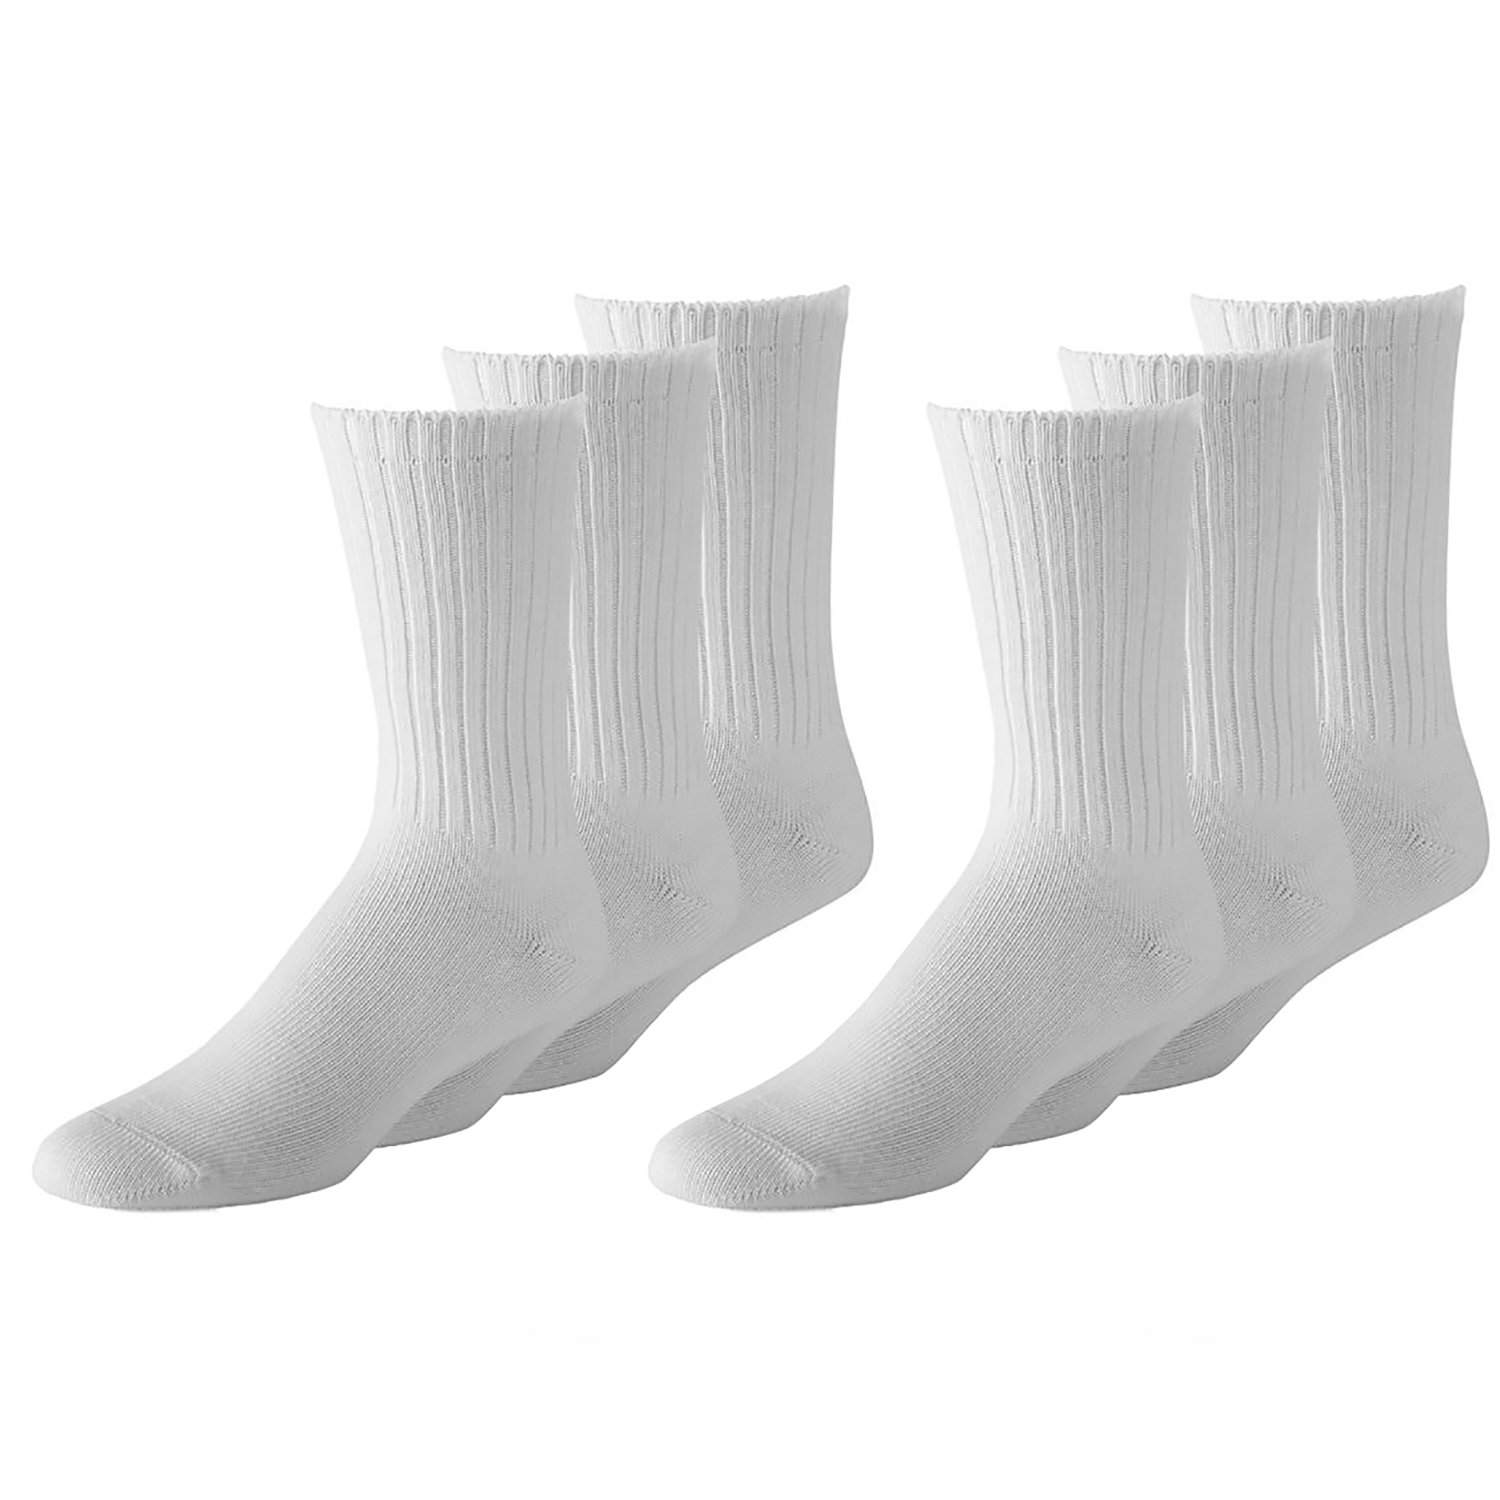 84 Pairs Men's Athletic Crew Socks - Bulk Lot Packs - Any Shoe Size